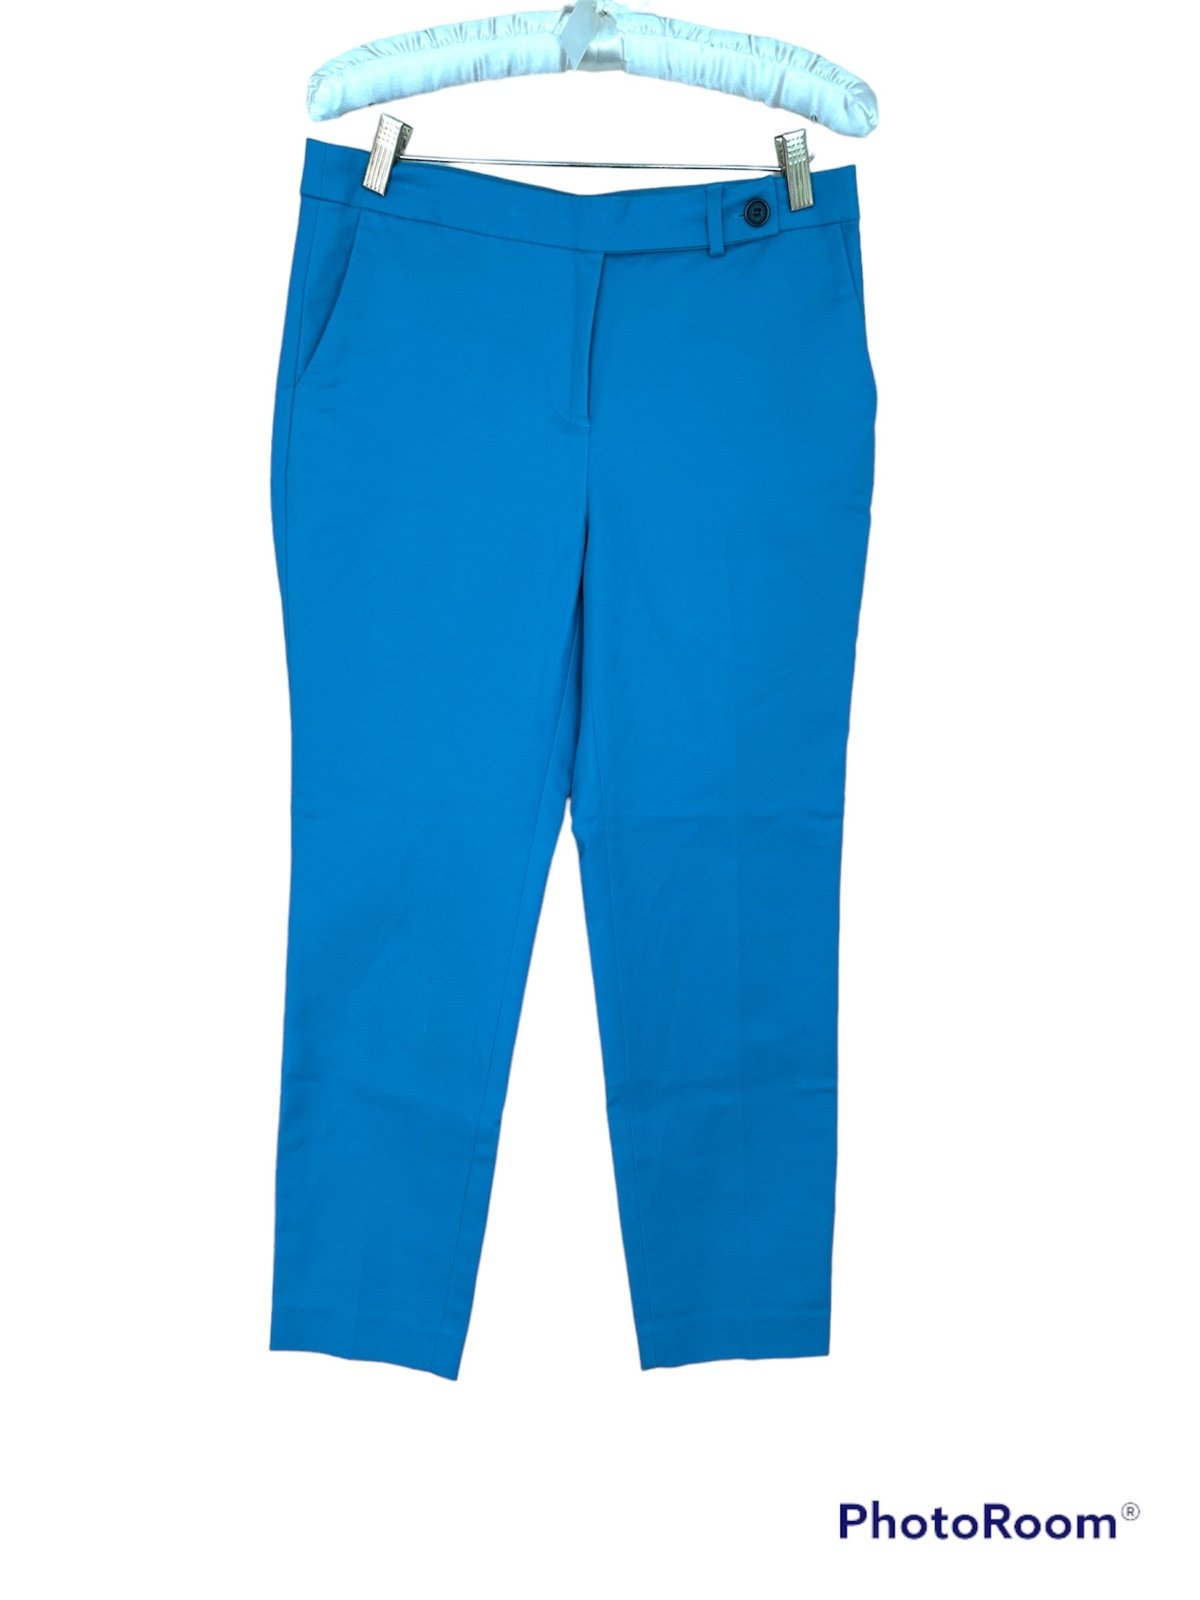 Wholesale price Pure Brand/Blue Pants/Size 4 MBX6Ac50g 